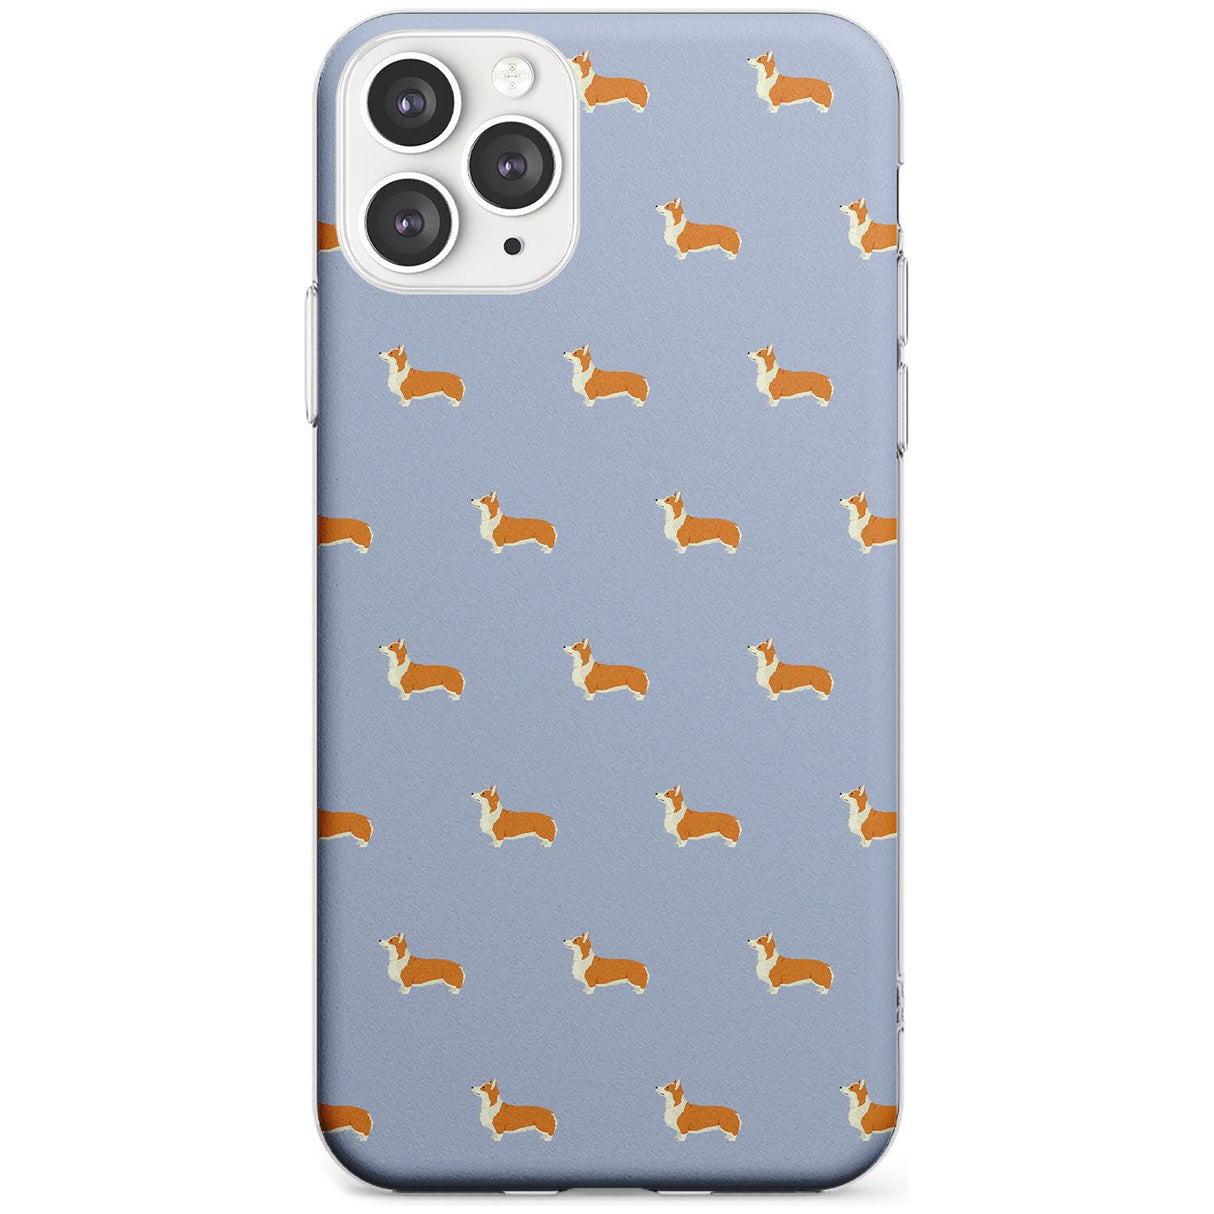 Pembroke Welsh Corgi Dog Pattern Slim TPU Phone Case for iPhone 11 Pro Max